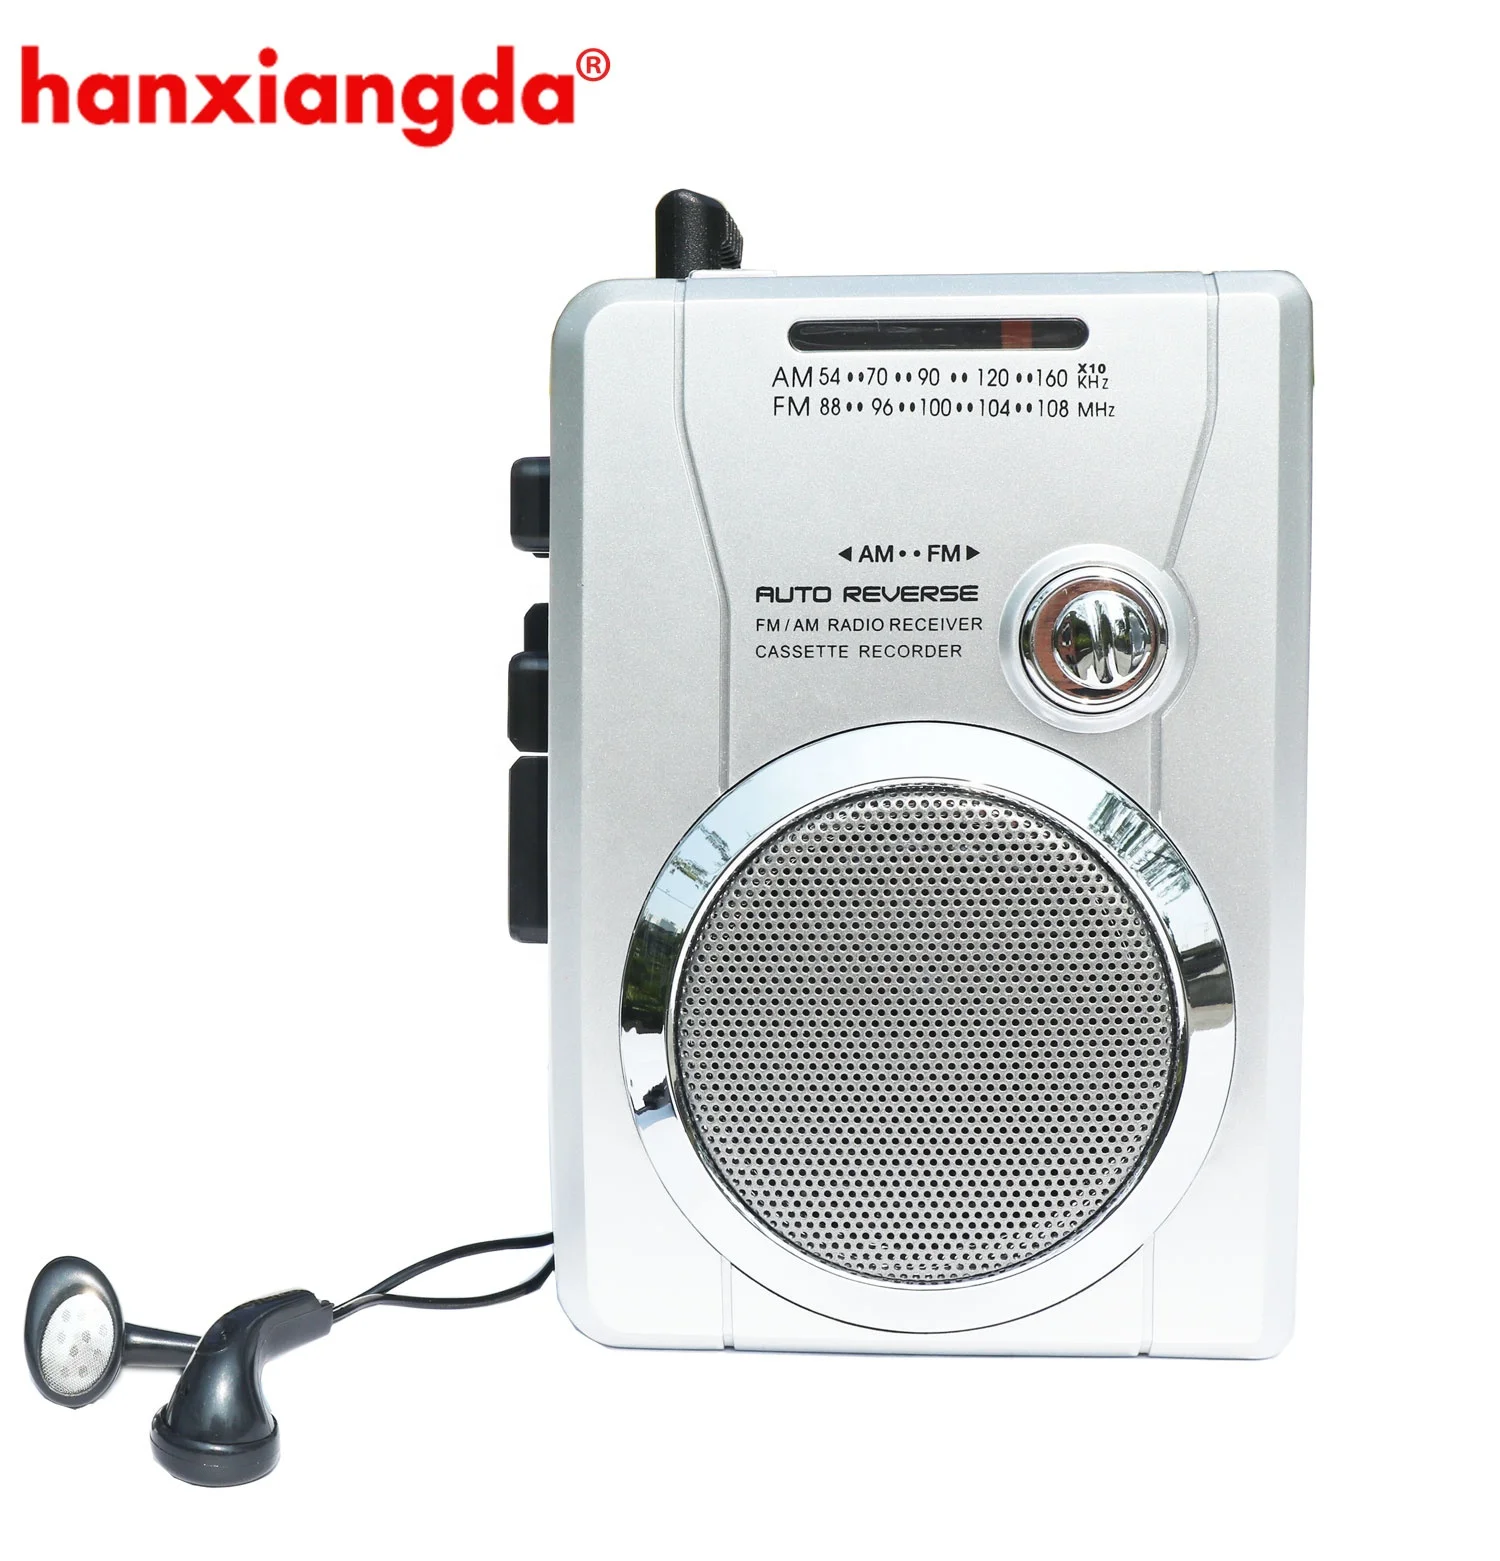 
China BSCI Manufacture Low Price Cassette Player Walkman AM FM Radio 